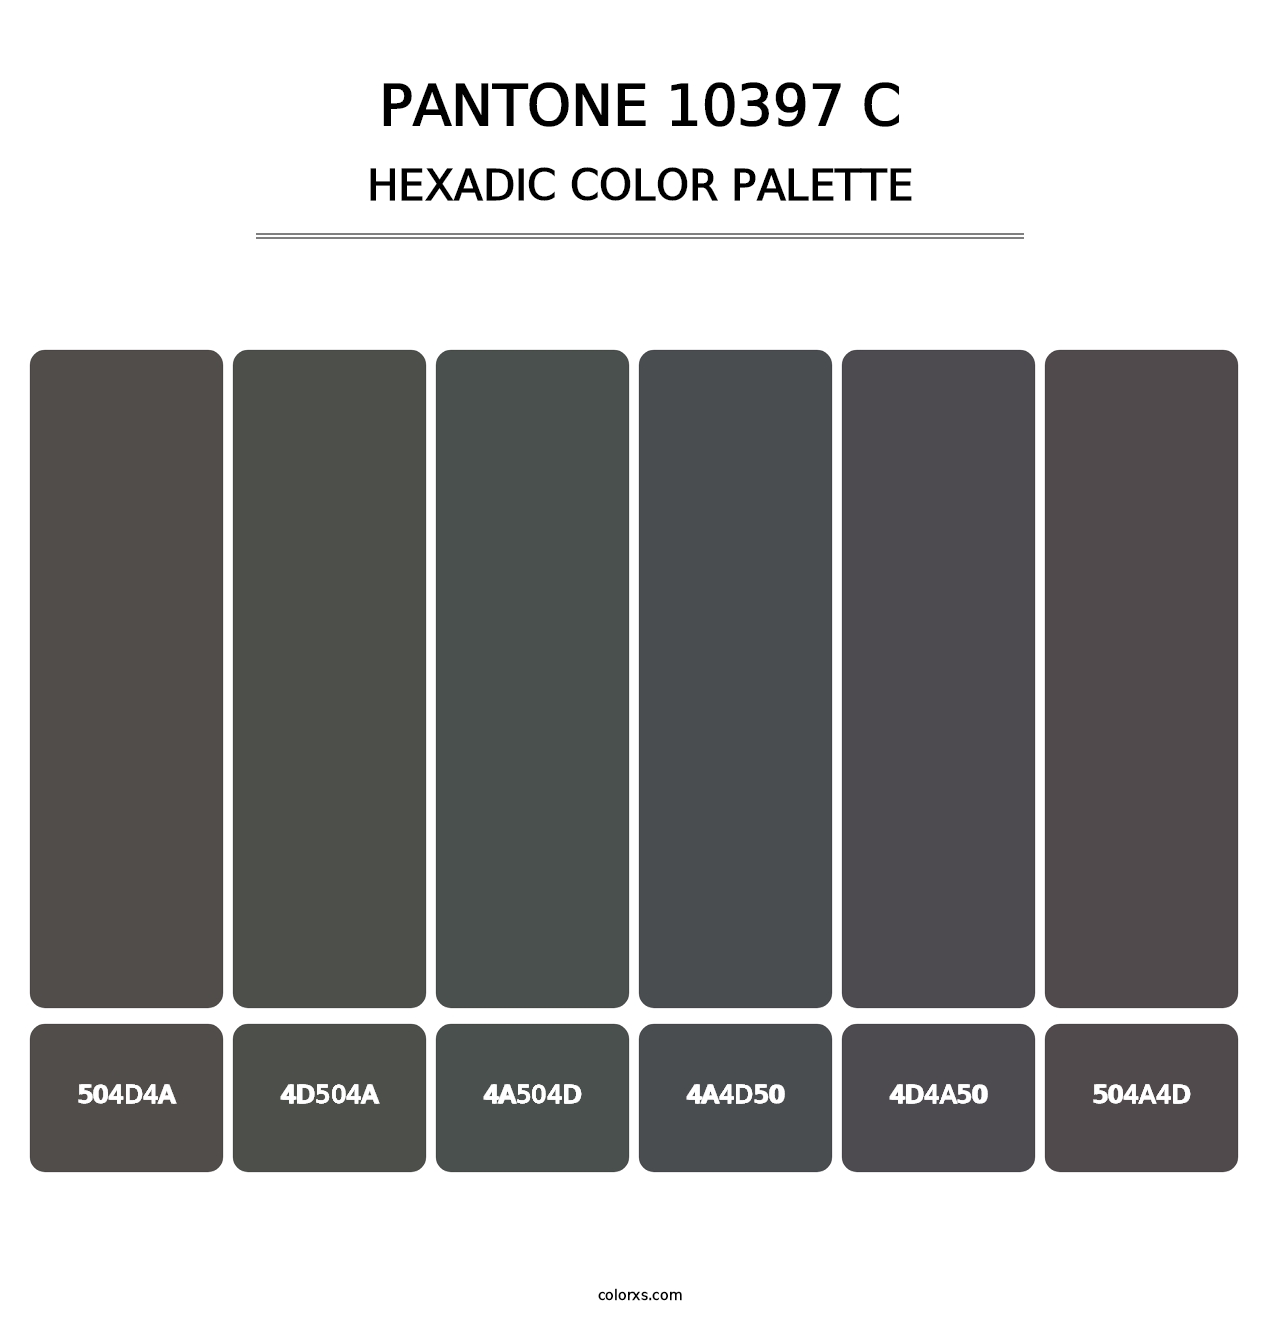 PANTONE 10397 C - Hexadic Color Palette